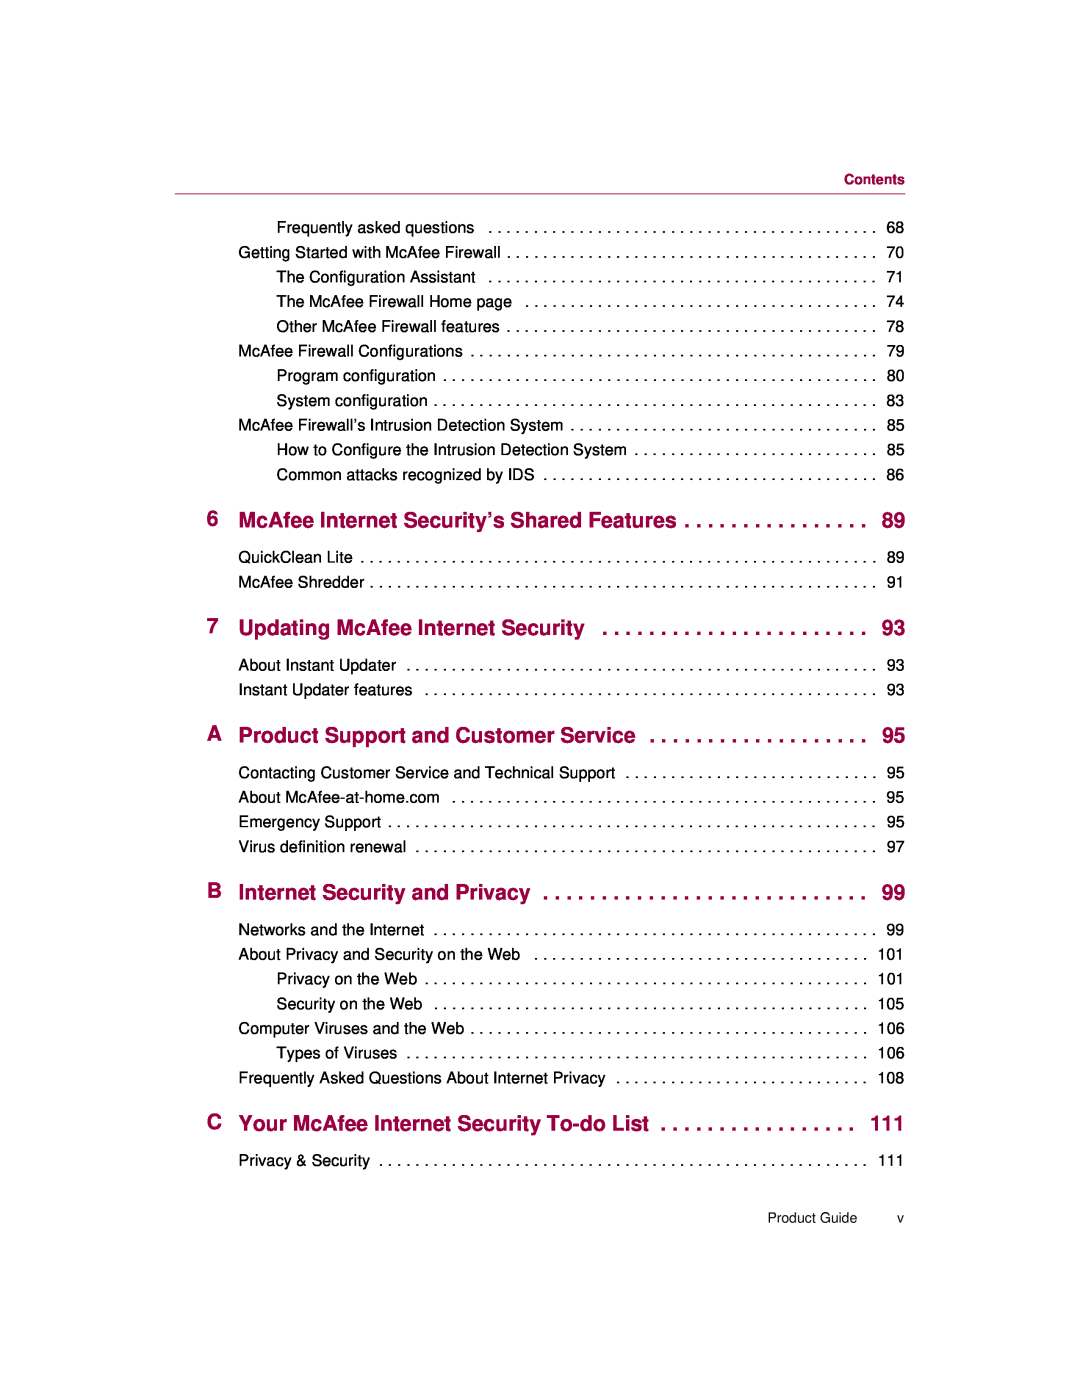 McAfee 5 manual McAfee Internet Security’s Shared Features, Updating McAfee Internet Security 